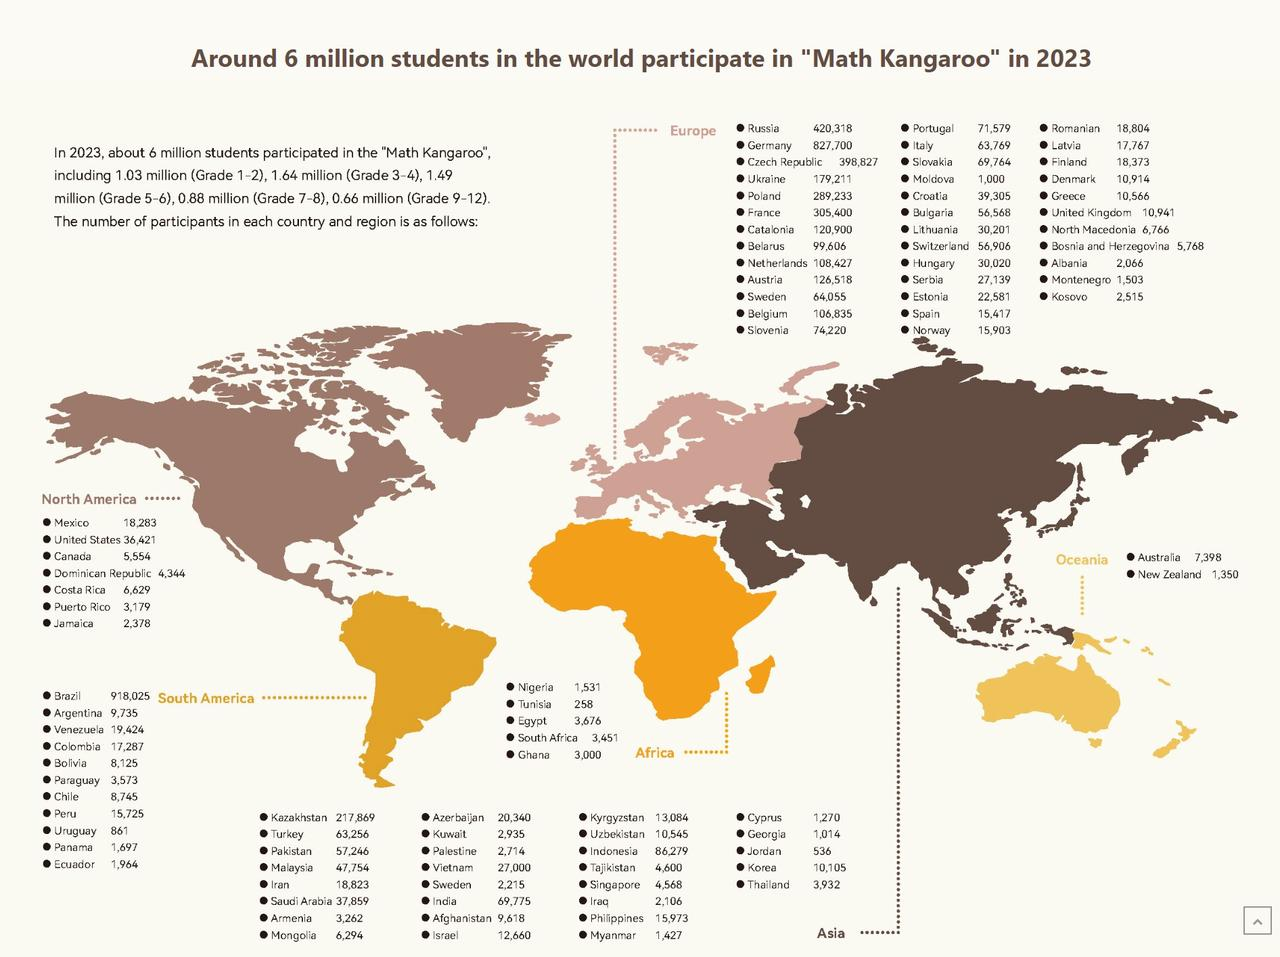 Participants in Math Kangaroo in 2023 around the world